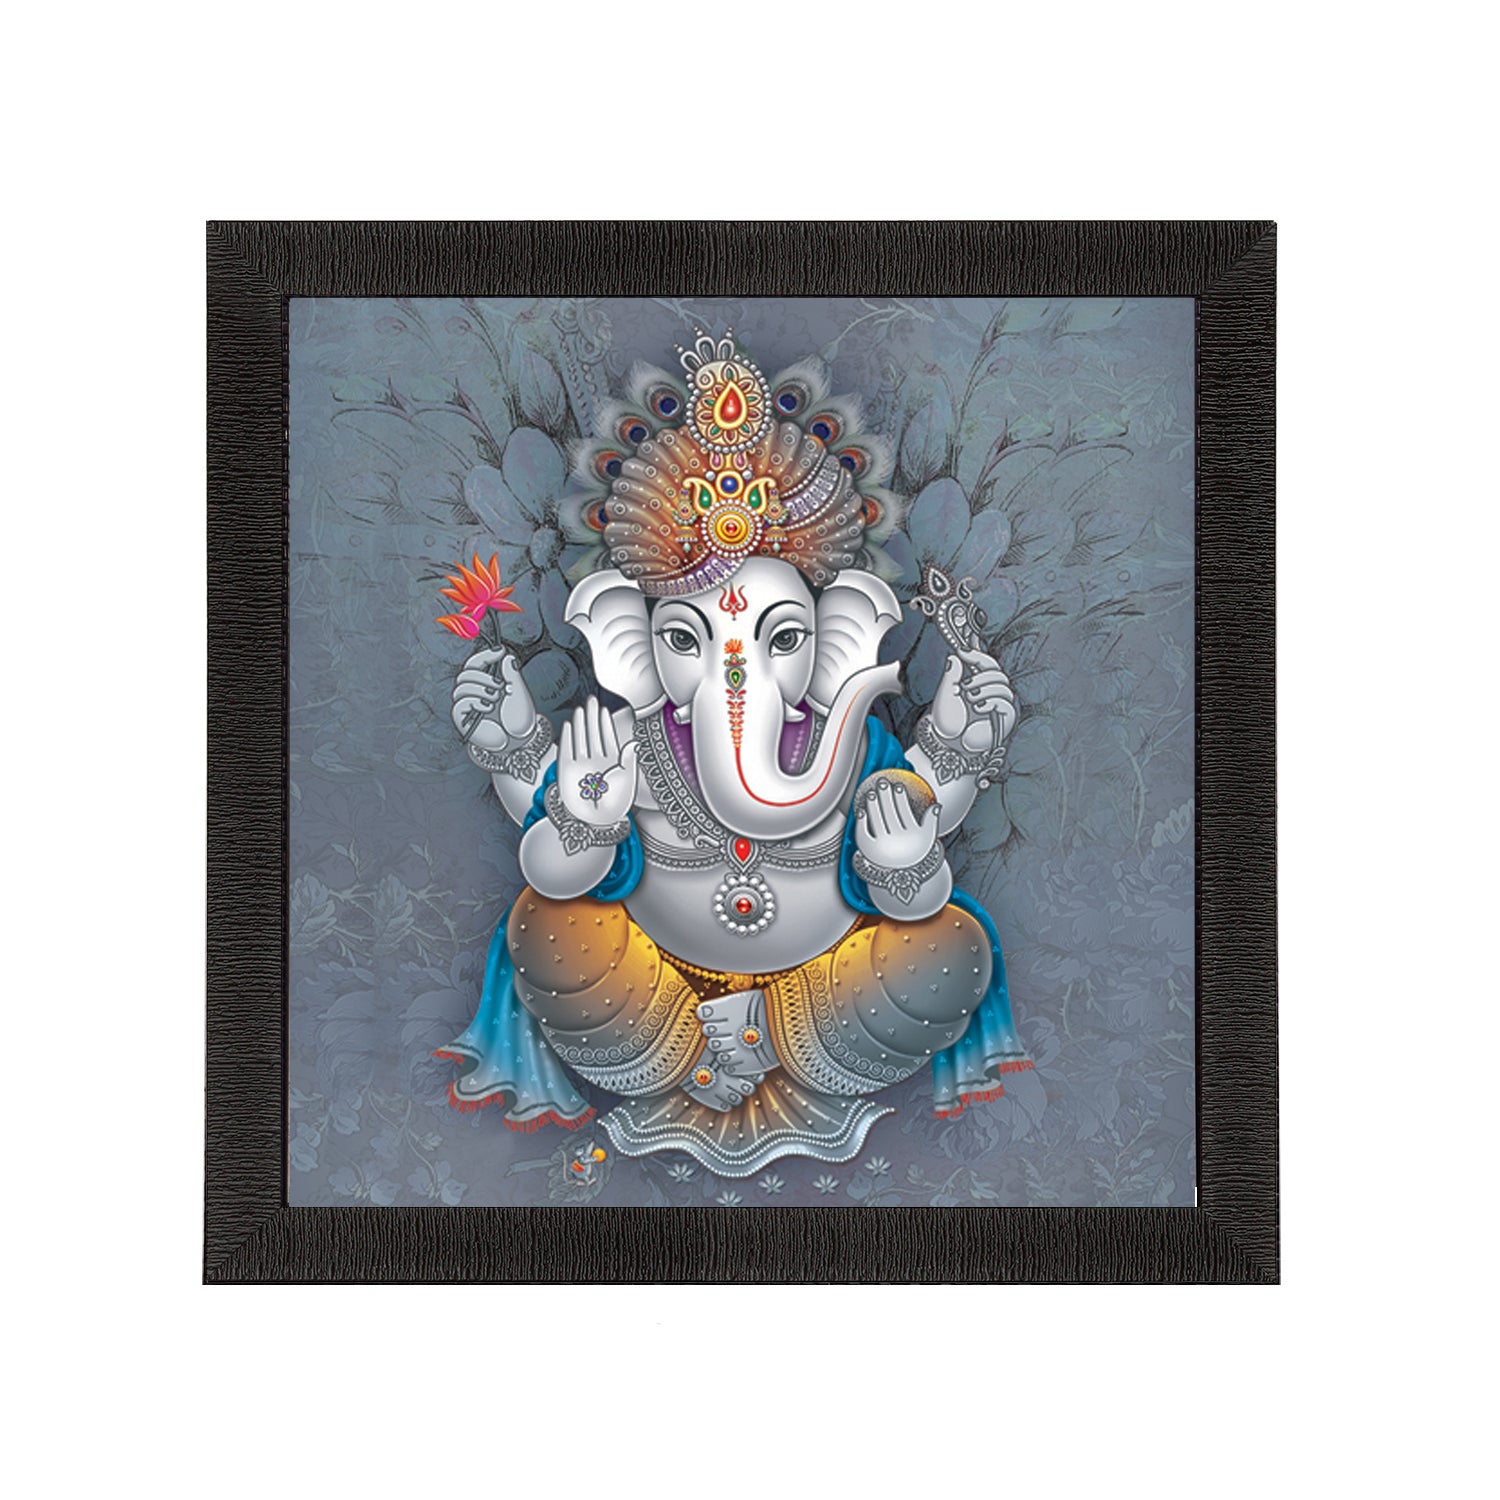 Chaturbhuj Lord Ganesha Painting Digital Printed Religious Wall Art